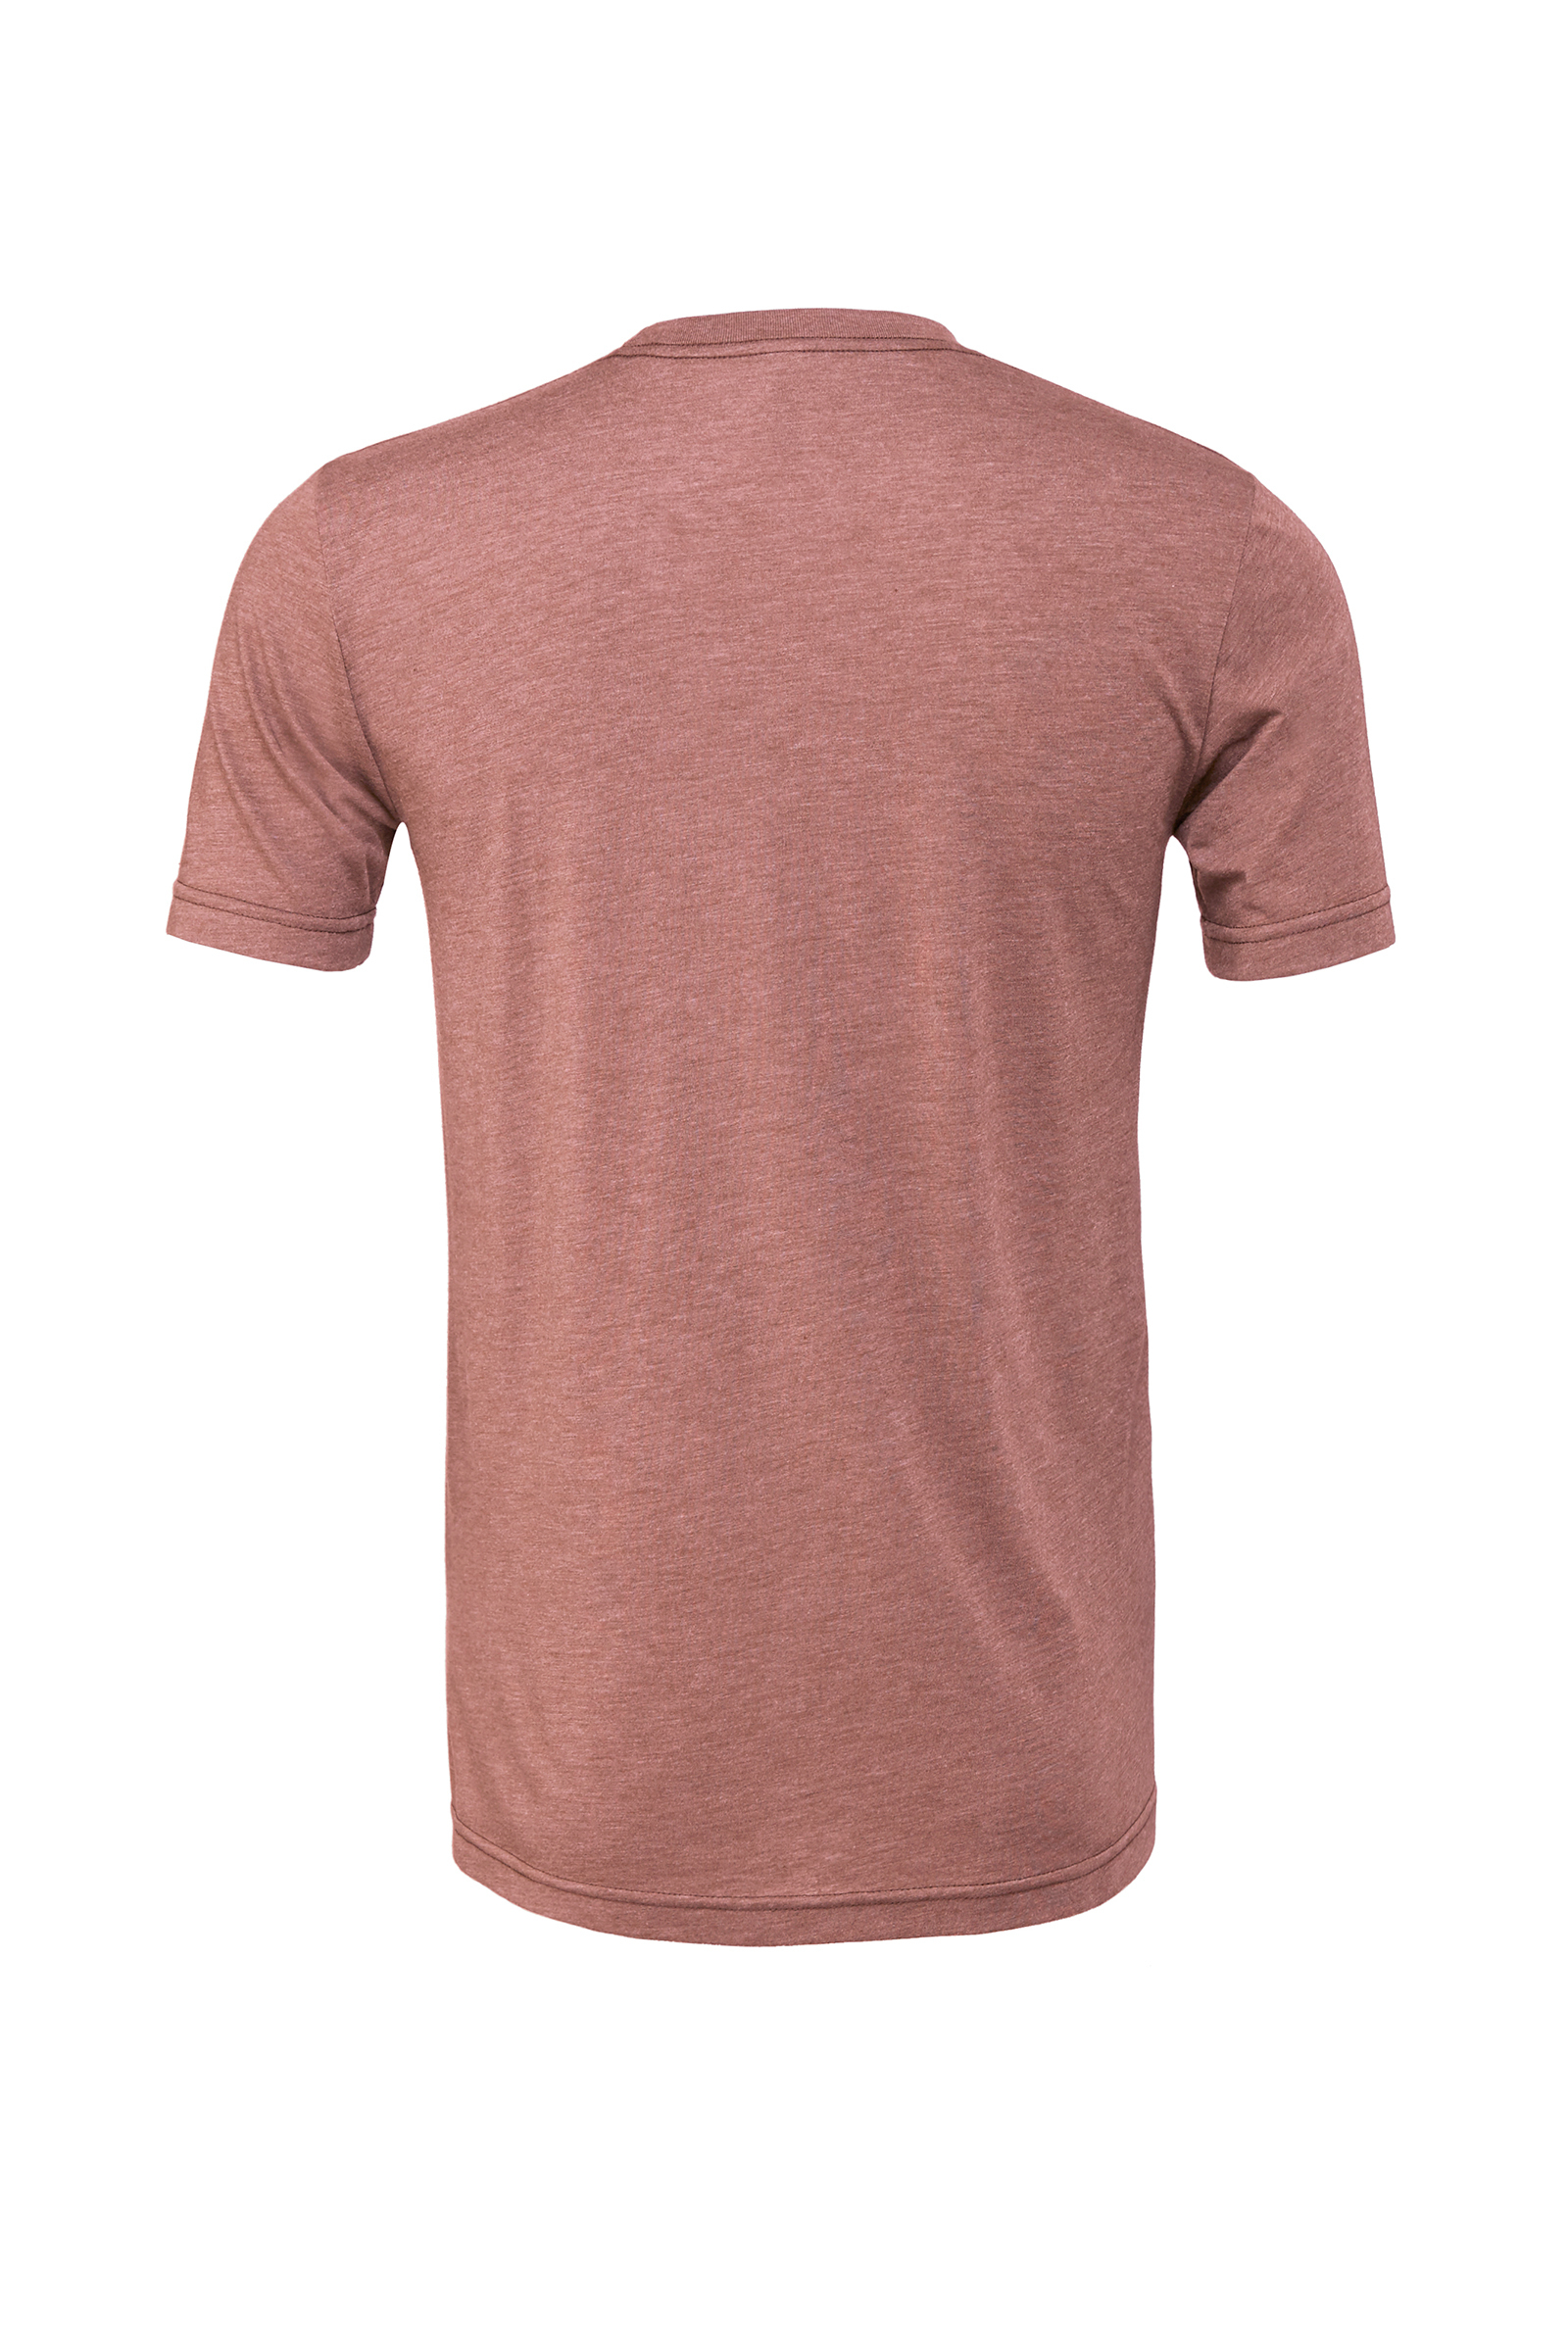 Next Level Camiseta de algodón para hombre, S, Gris jaspeado/ Rosa claro  (Heather Grey/Light Pink)